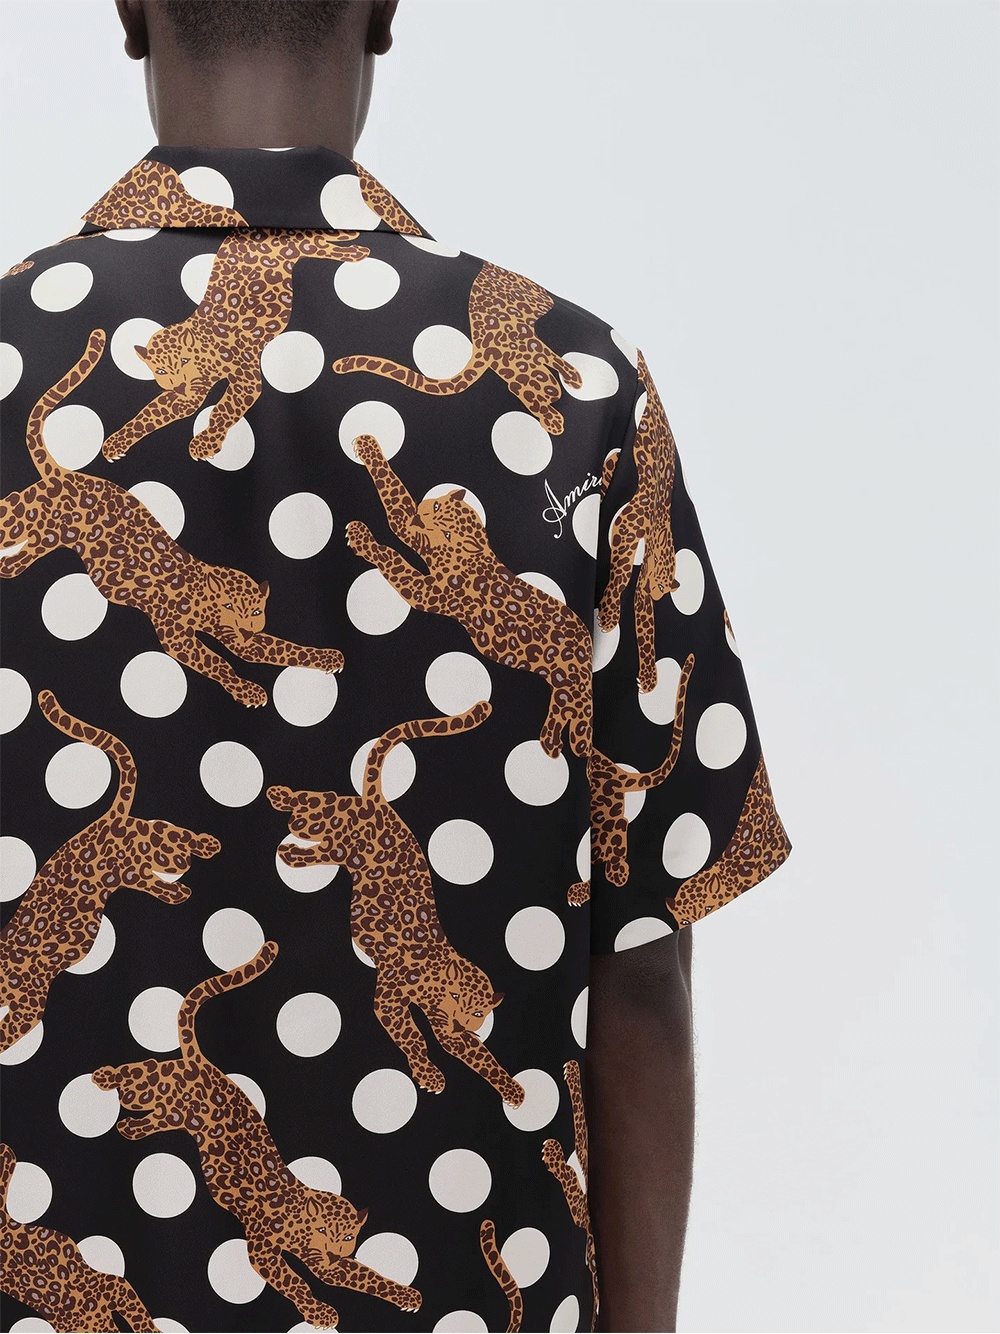 Leopard Polka Dots Bowling Shirt - 7